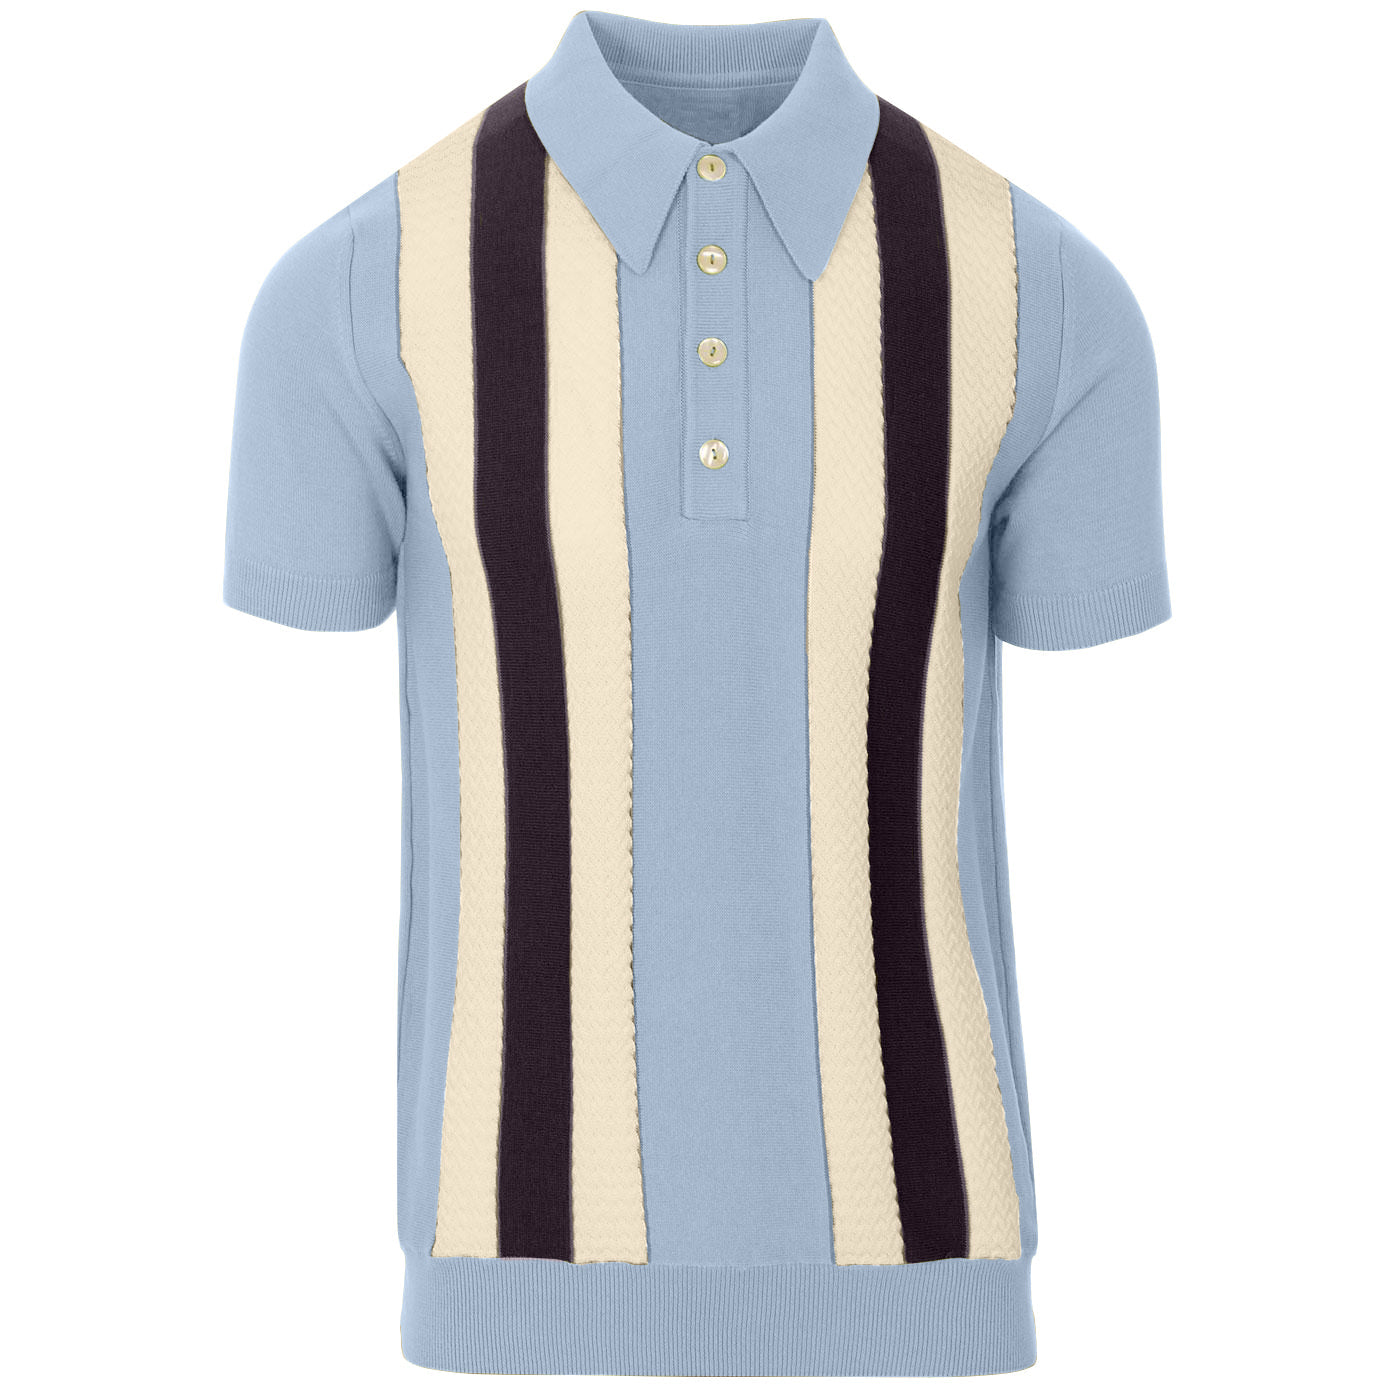 Gute Qualität OXKNIT Men Vintage Clothing 1960s Mod Style Casual Knit OXKnit Stripe – Polo Retro Blue